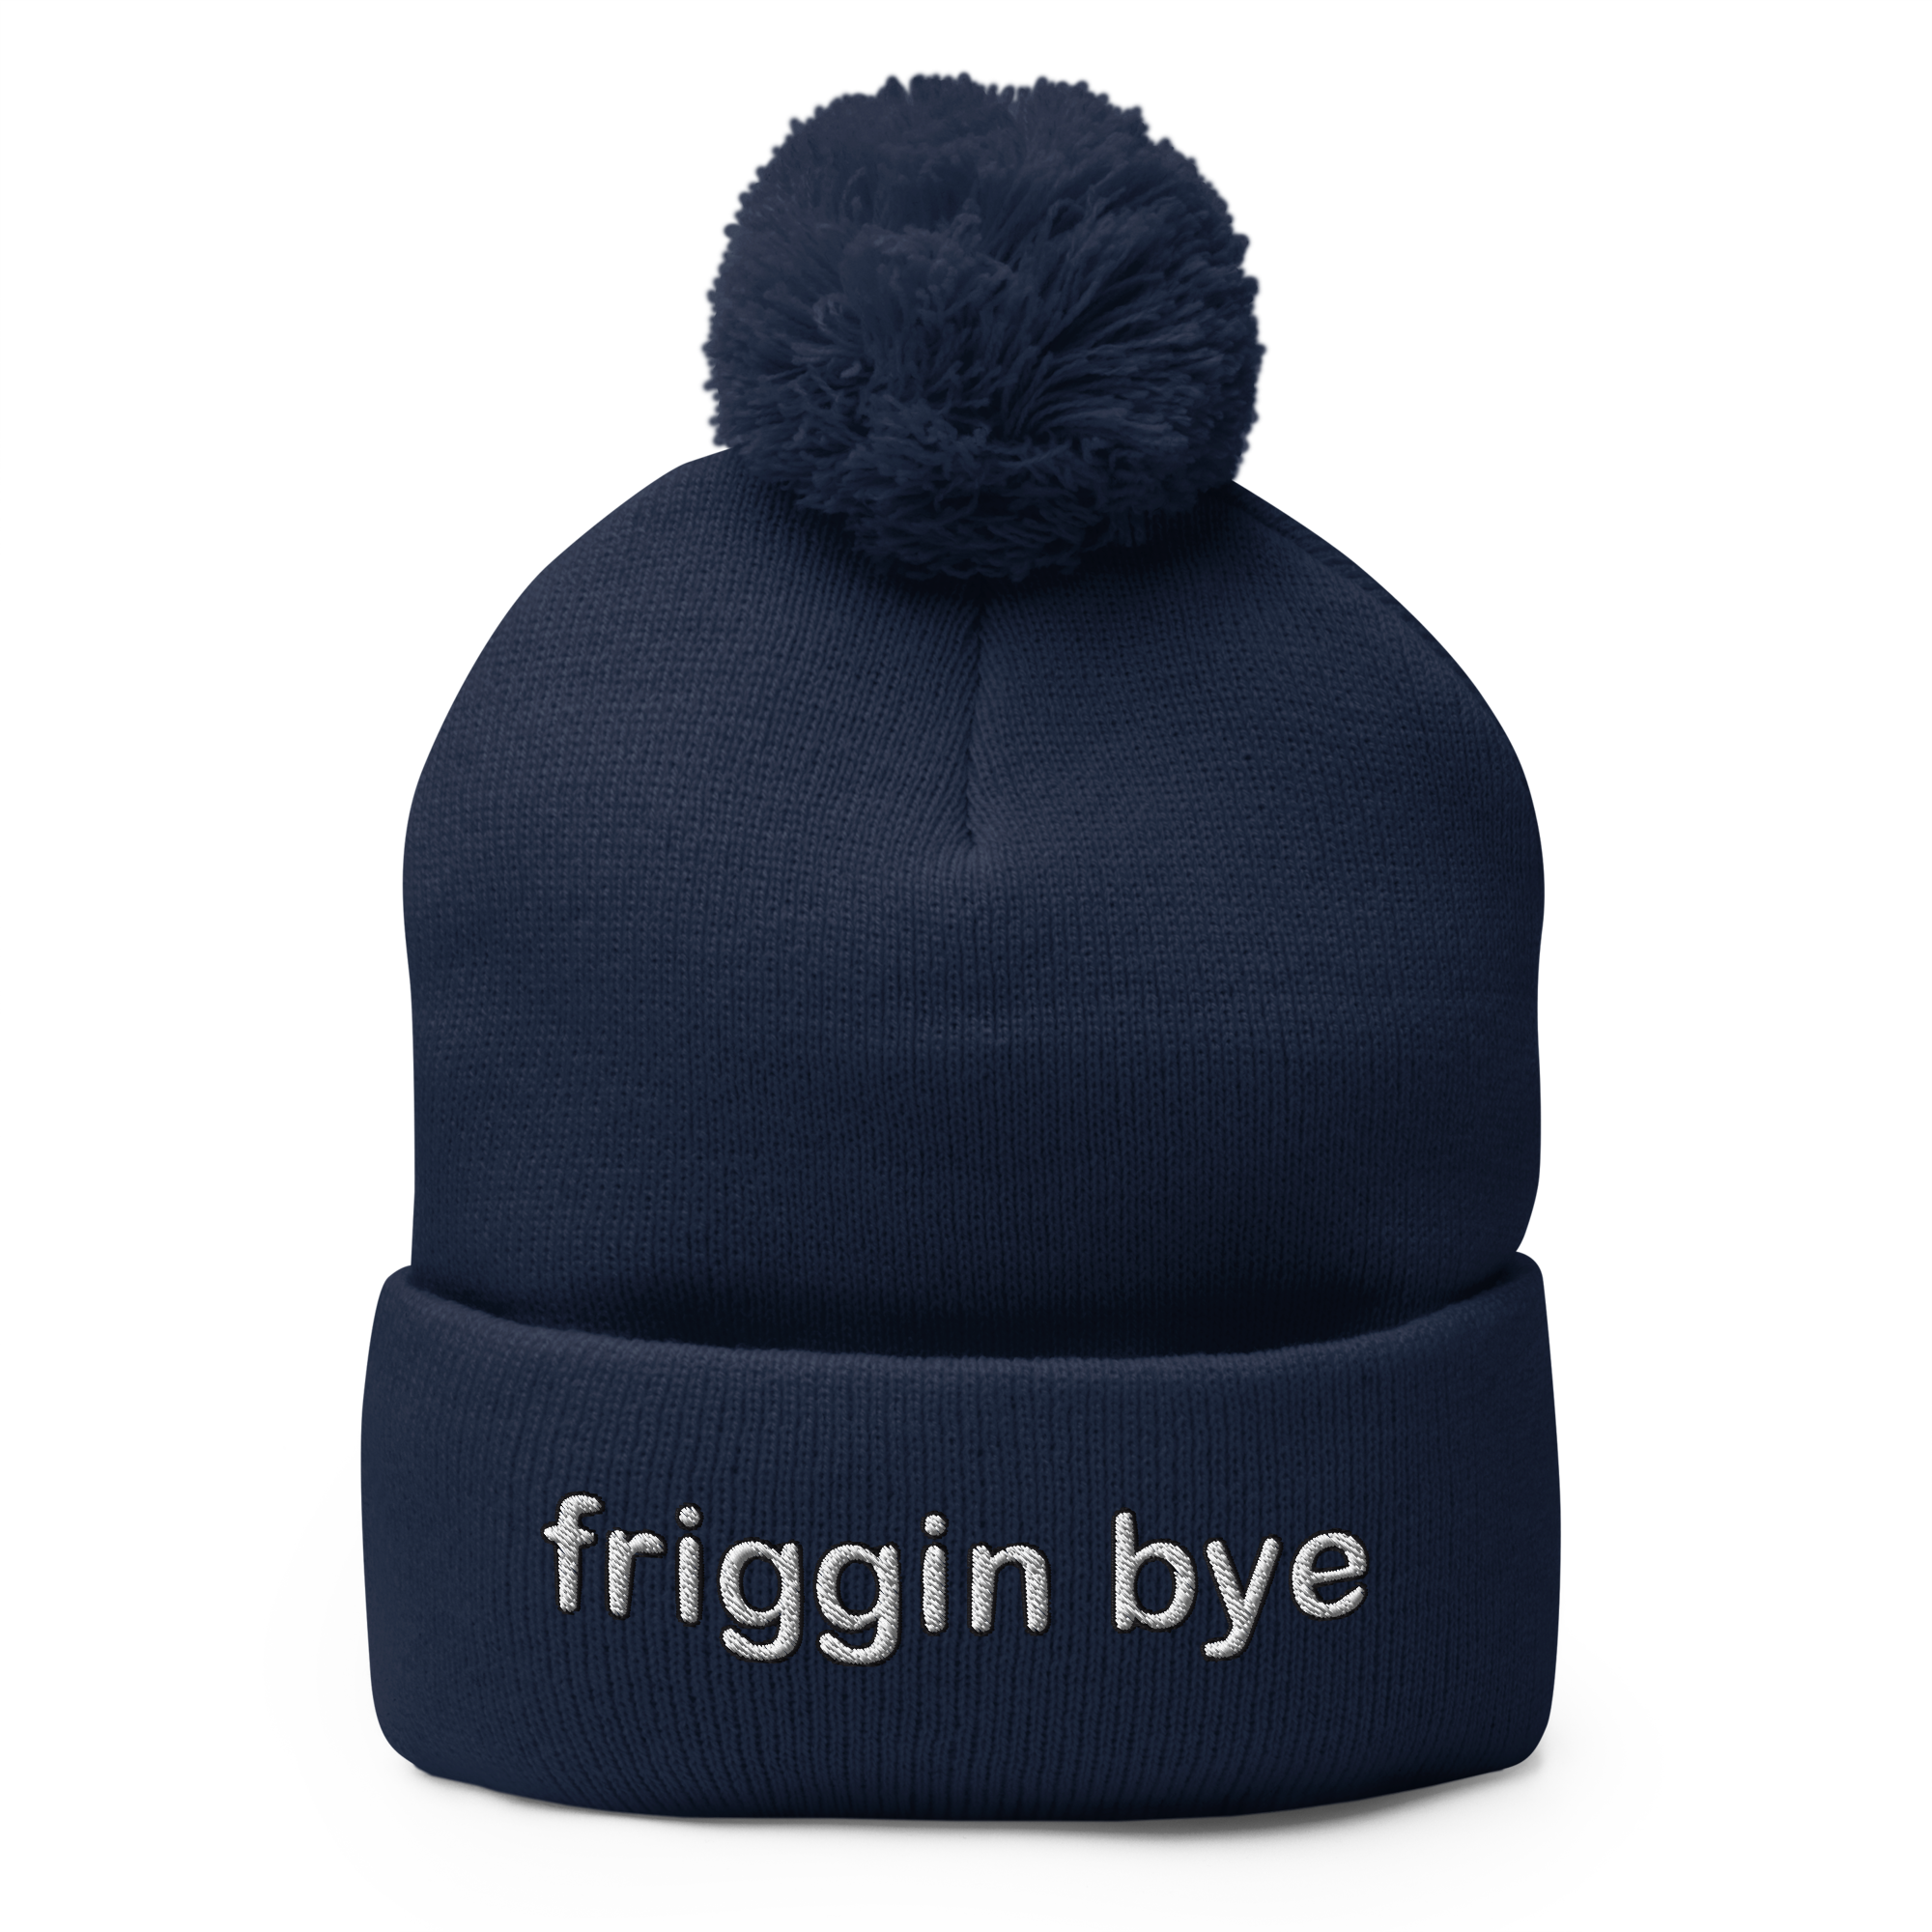 "Friggin Bye" Embroidered Adult Beanie Pom-Pom Hat